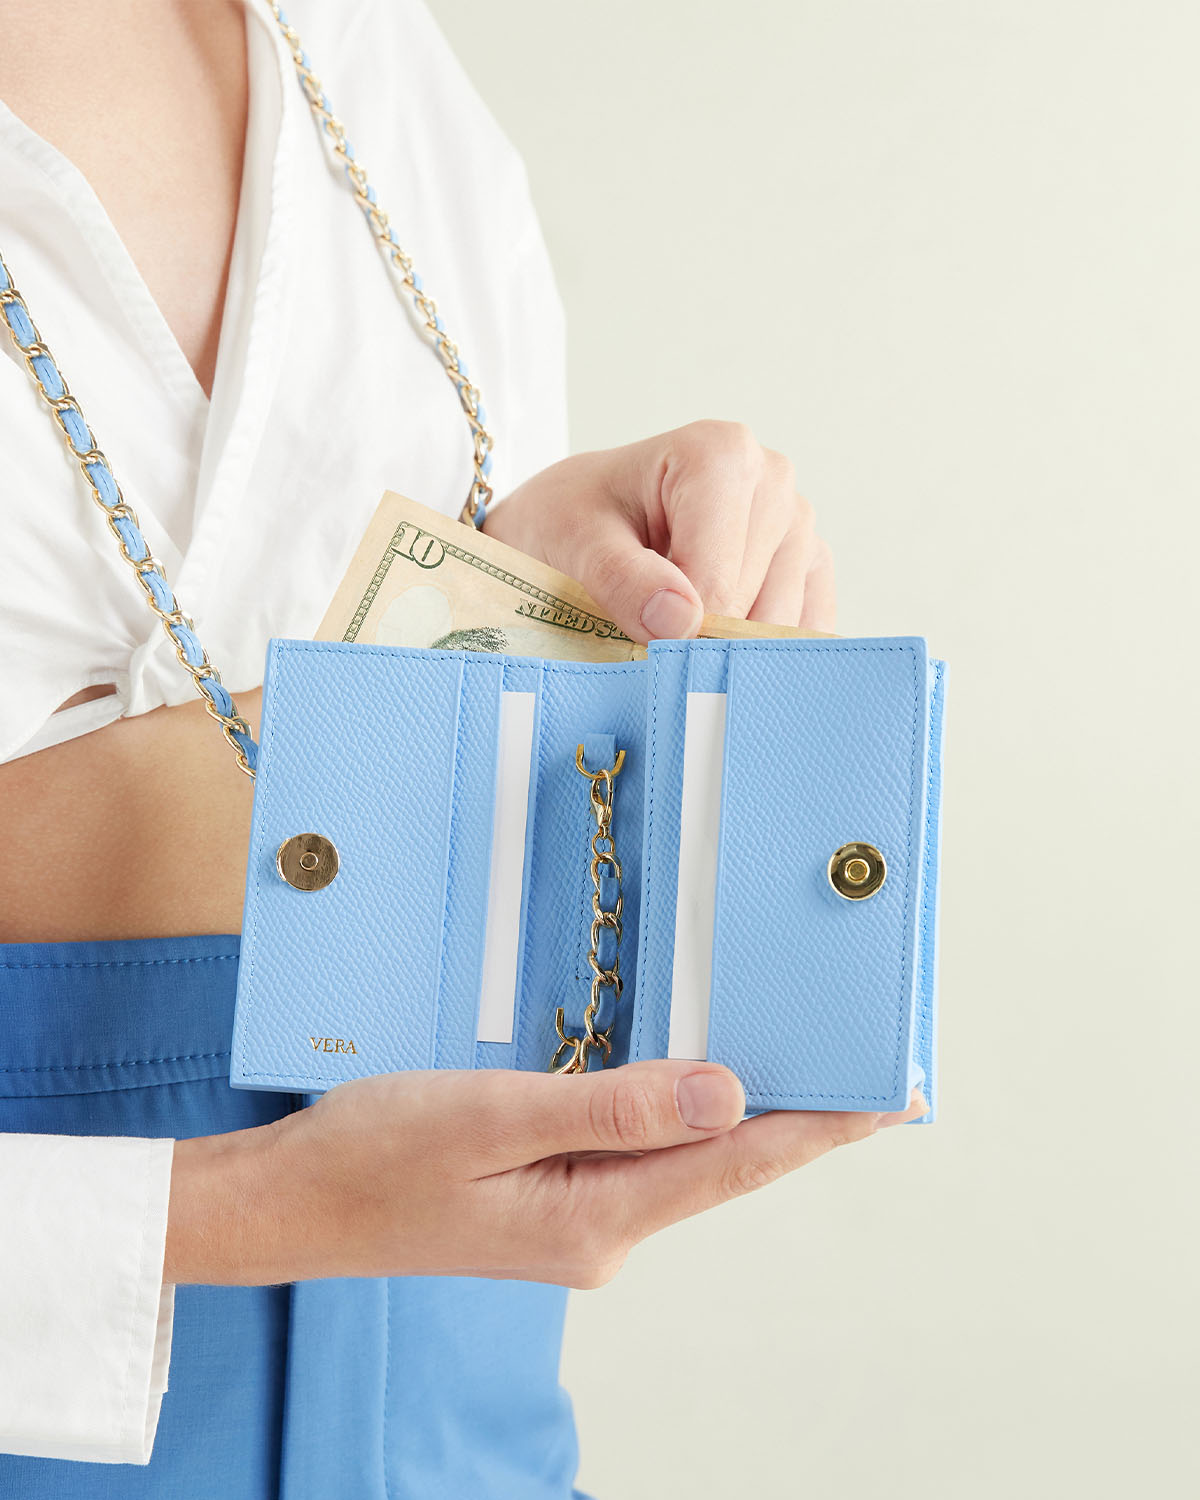 VERA Emily Flap Wallet with Leather Braided Gold Chain in Serene Blue กระเป๋าสตางค์หนังแท้ แบบเปิดฝา พร้อมสายโซ่สีทองร้อยหนัง สีฟ้า